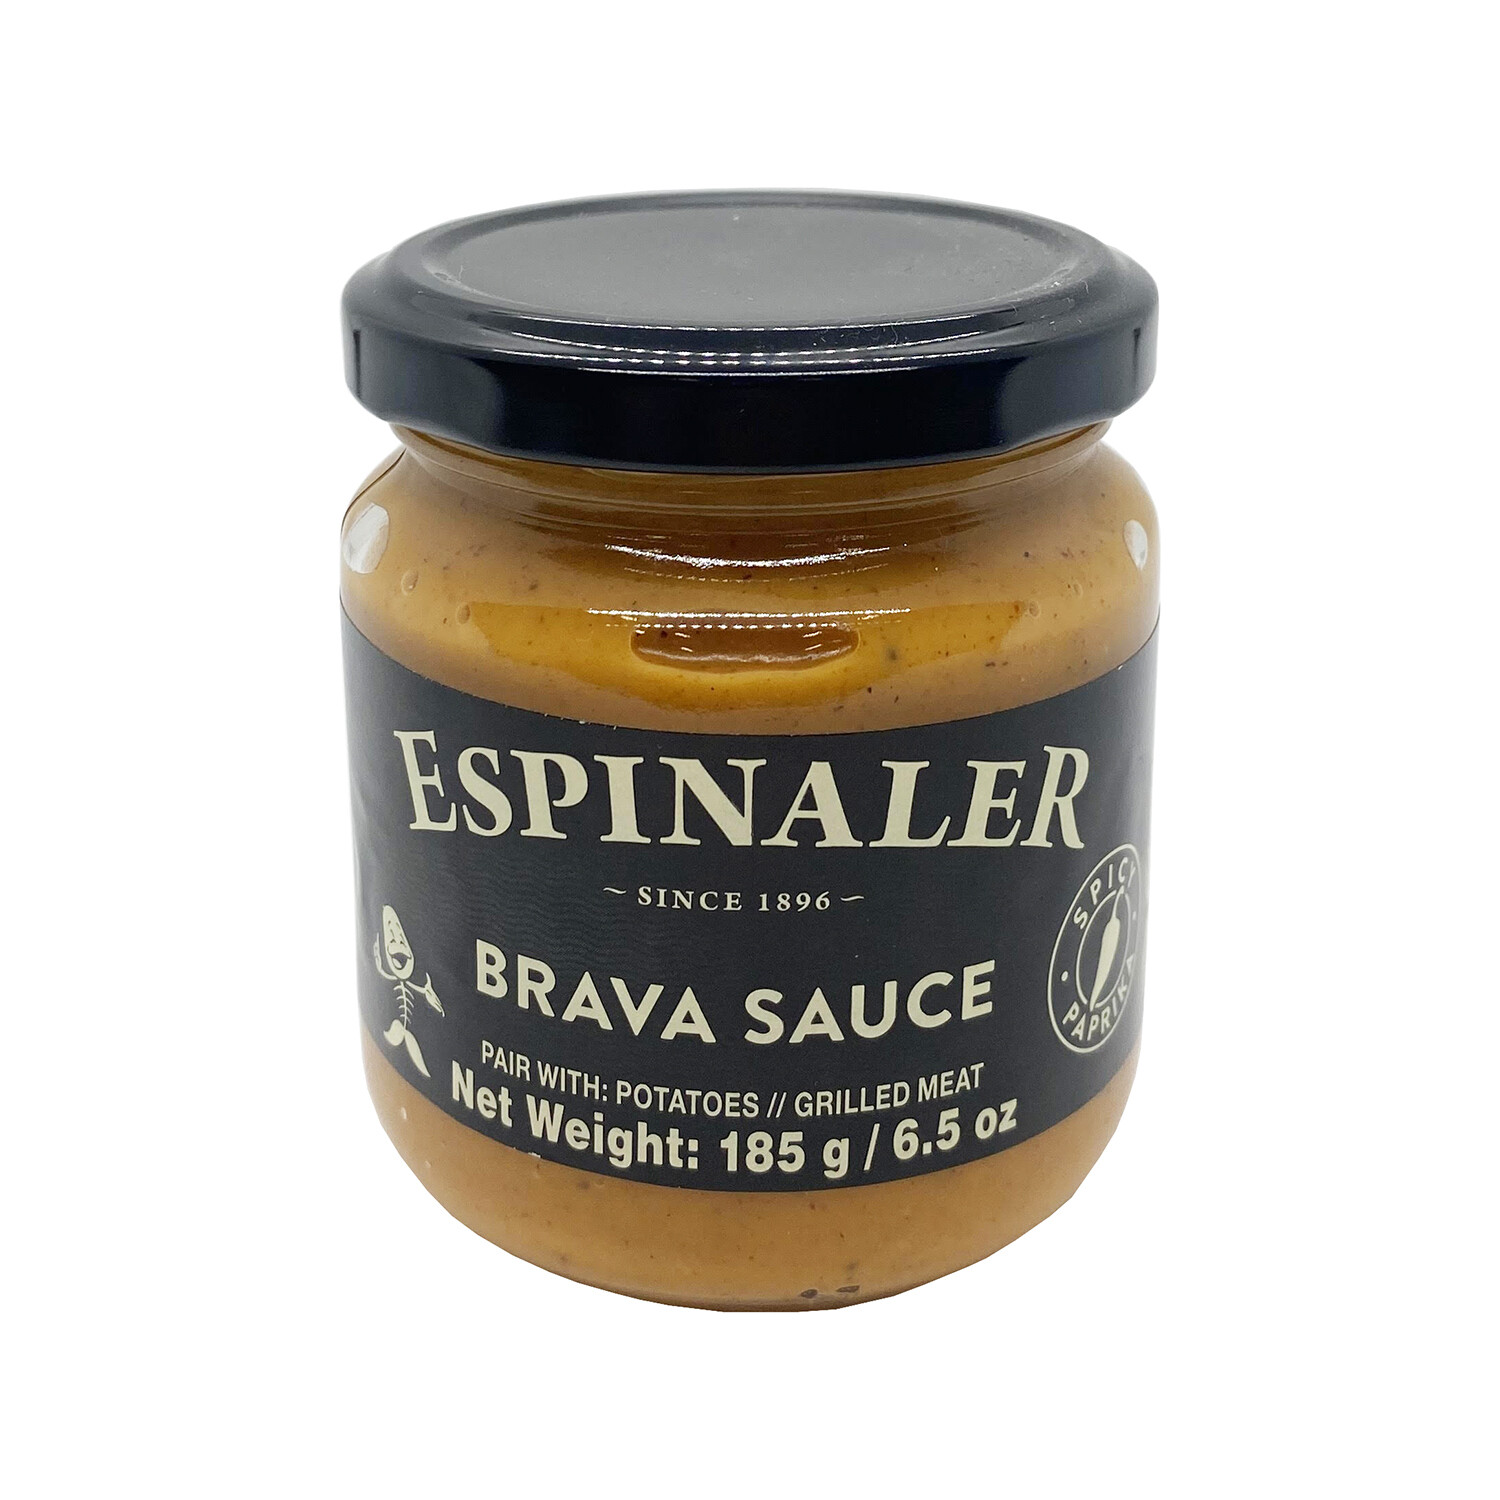 Espinaler Brava Sauce Spain 6.5oz